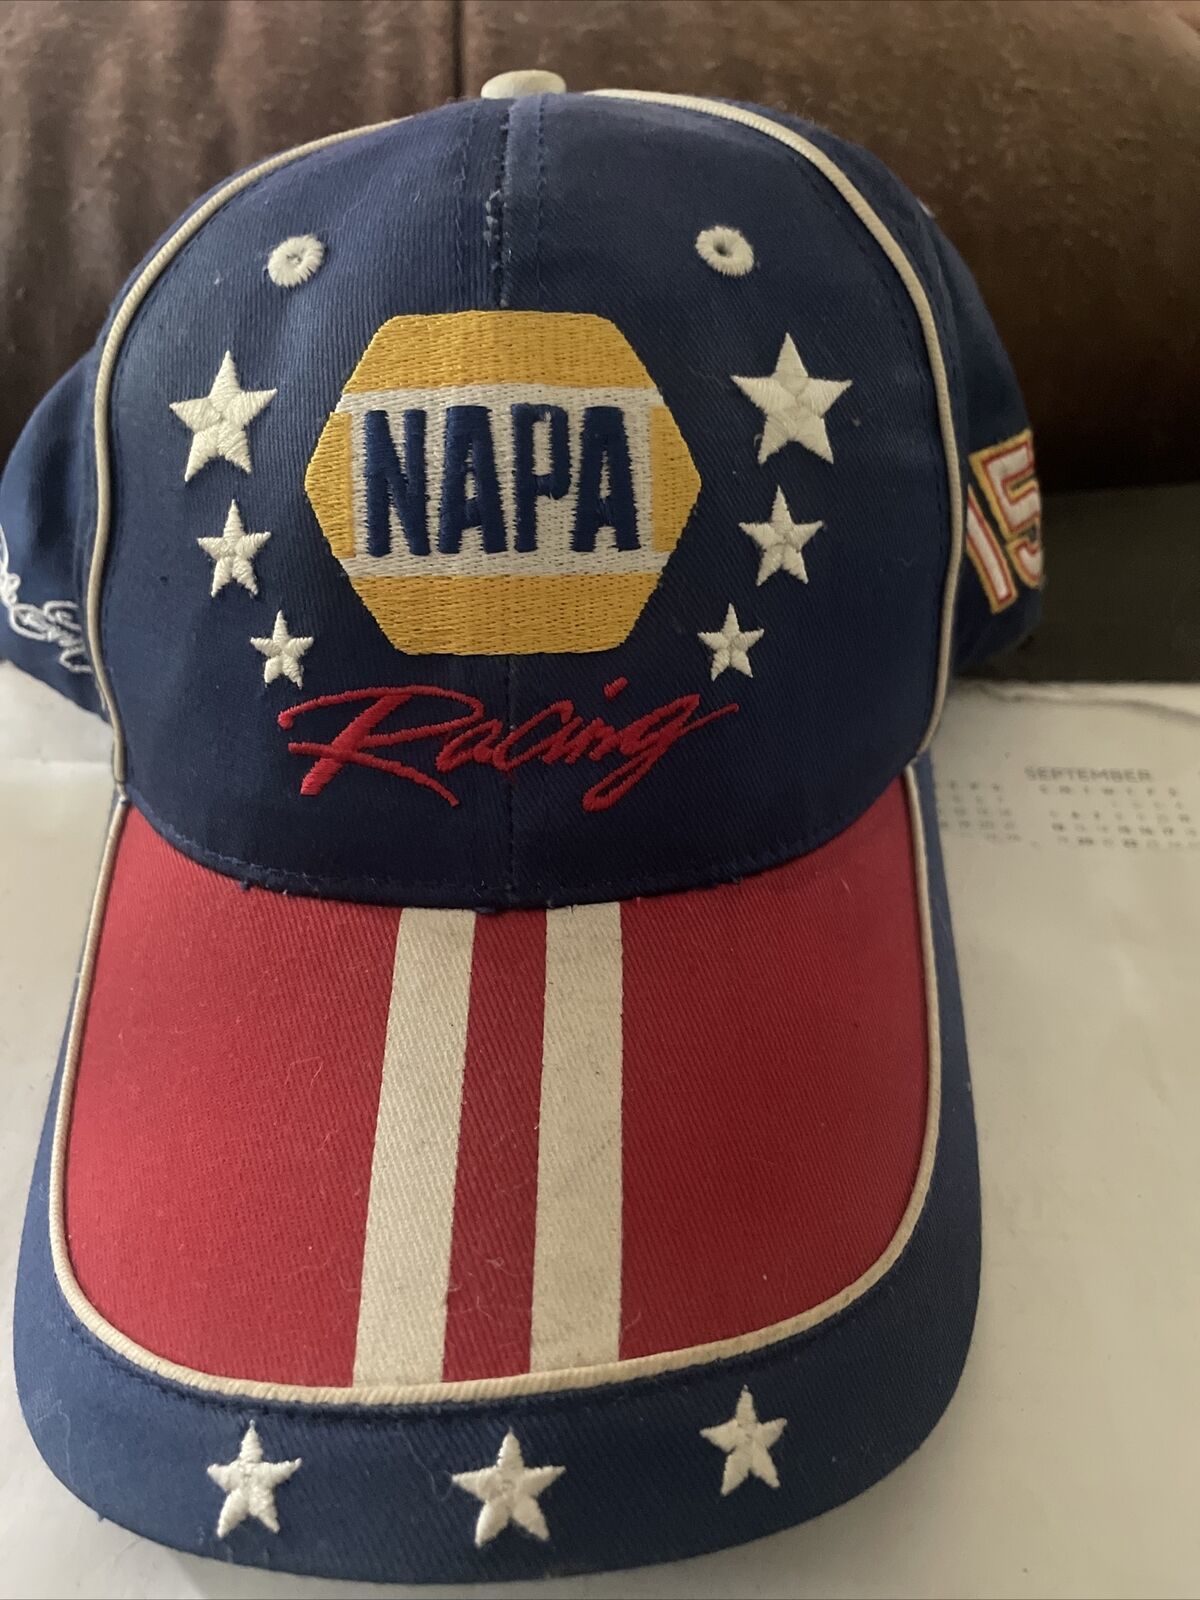 VTG NAPA racing Dale Earnhardt 15 NASCAR Red White & Blue Baseball Cap-
show ... - $15.99